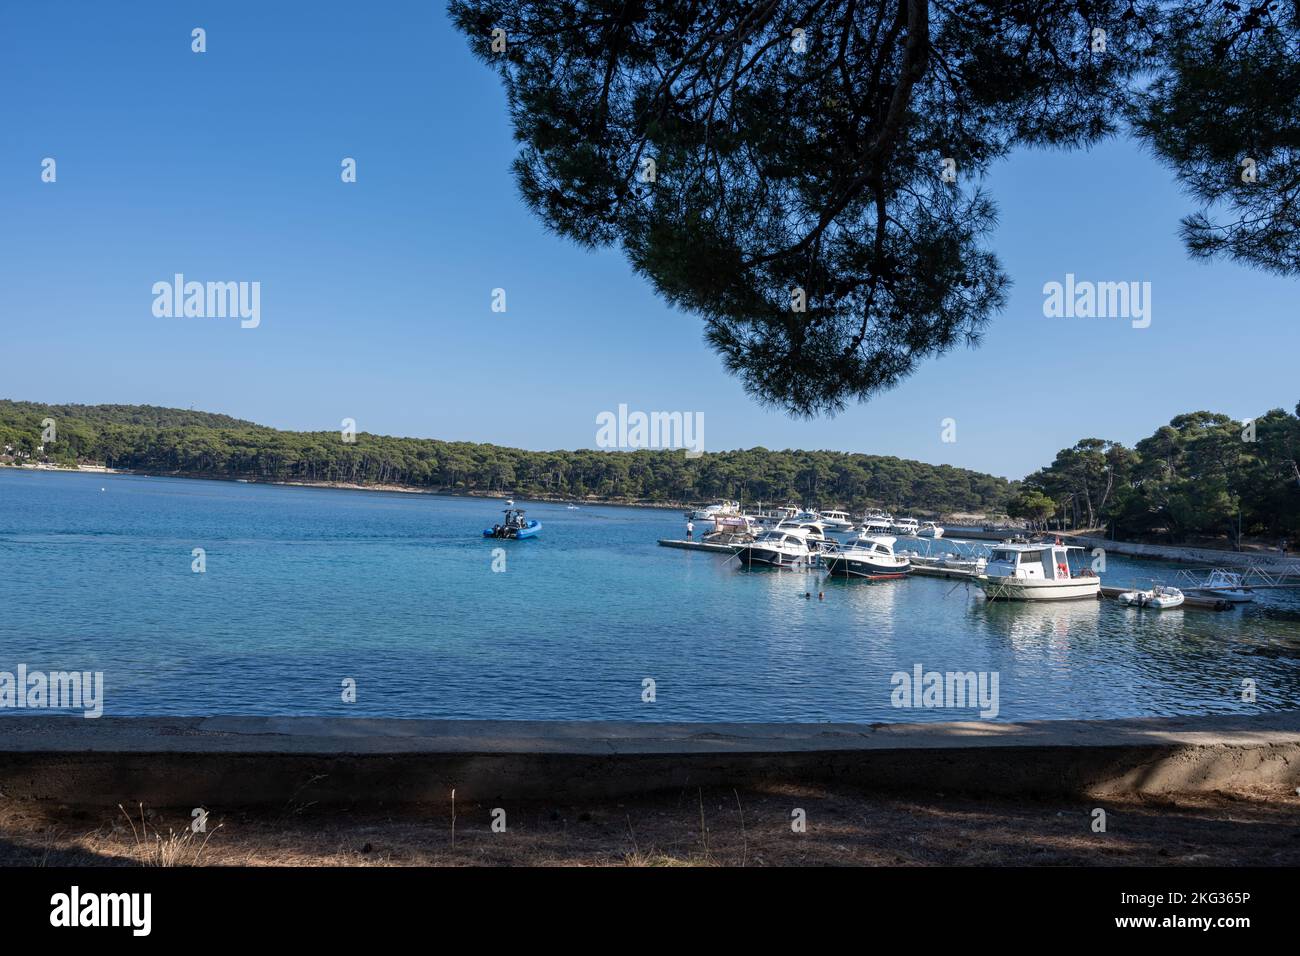 An ocean bay at Osor village, Losinj island, the Adriatic Sea, Croatia Stock Photo